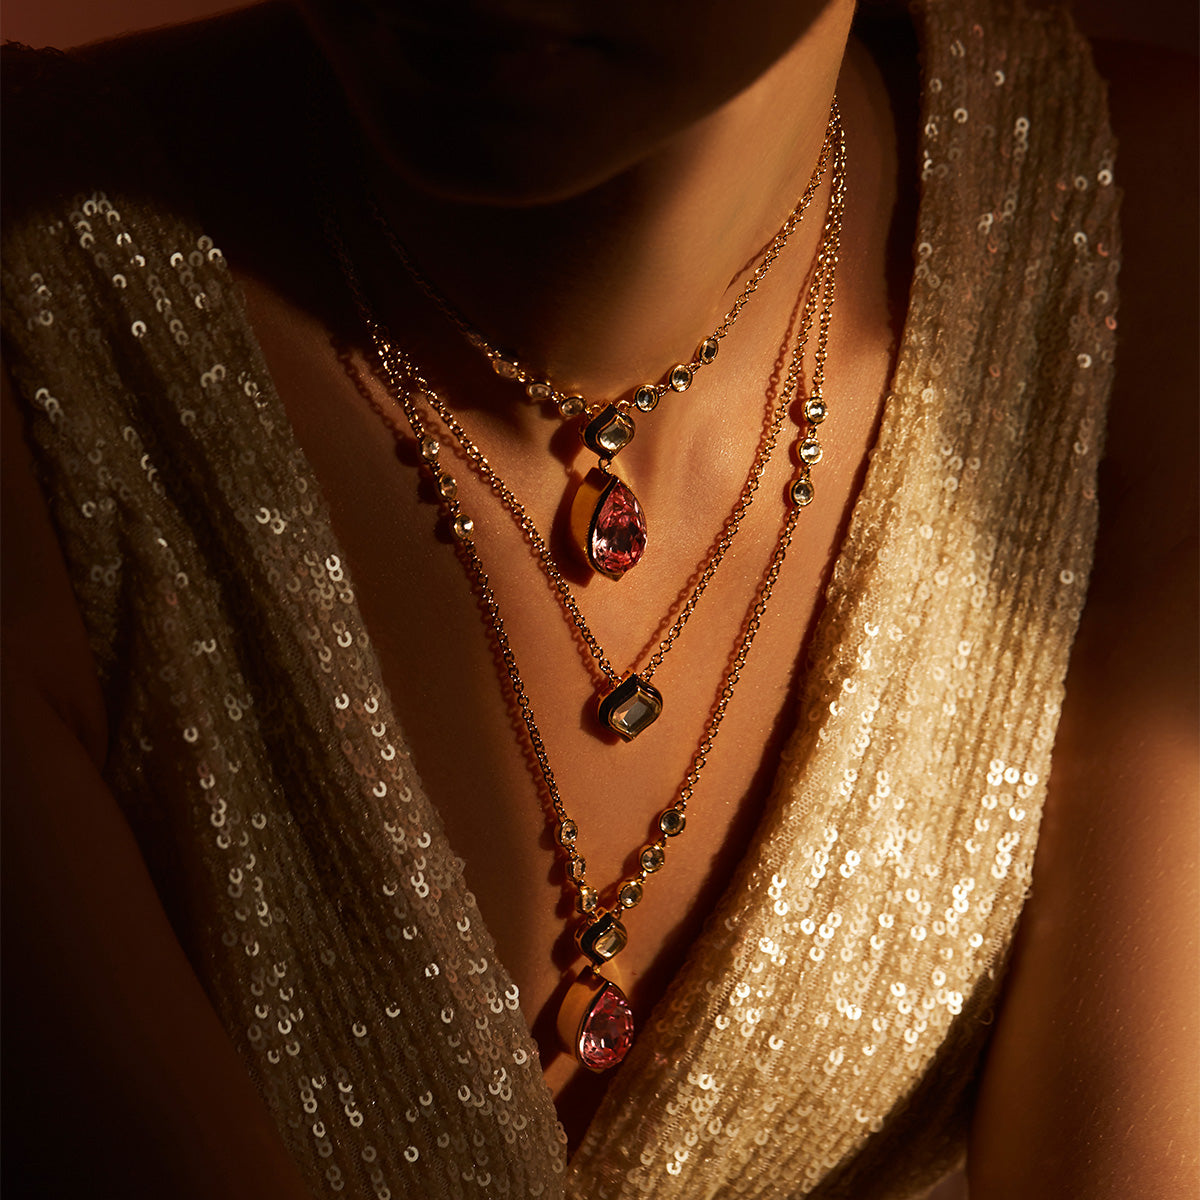 Amina Pink Crystal Necklace - Isharya | Modern Indian Jewelry